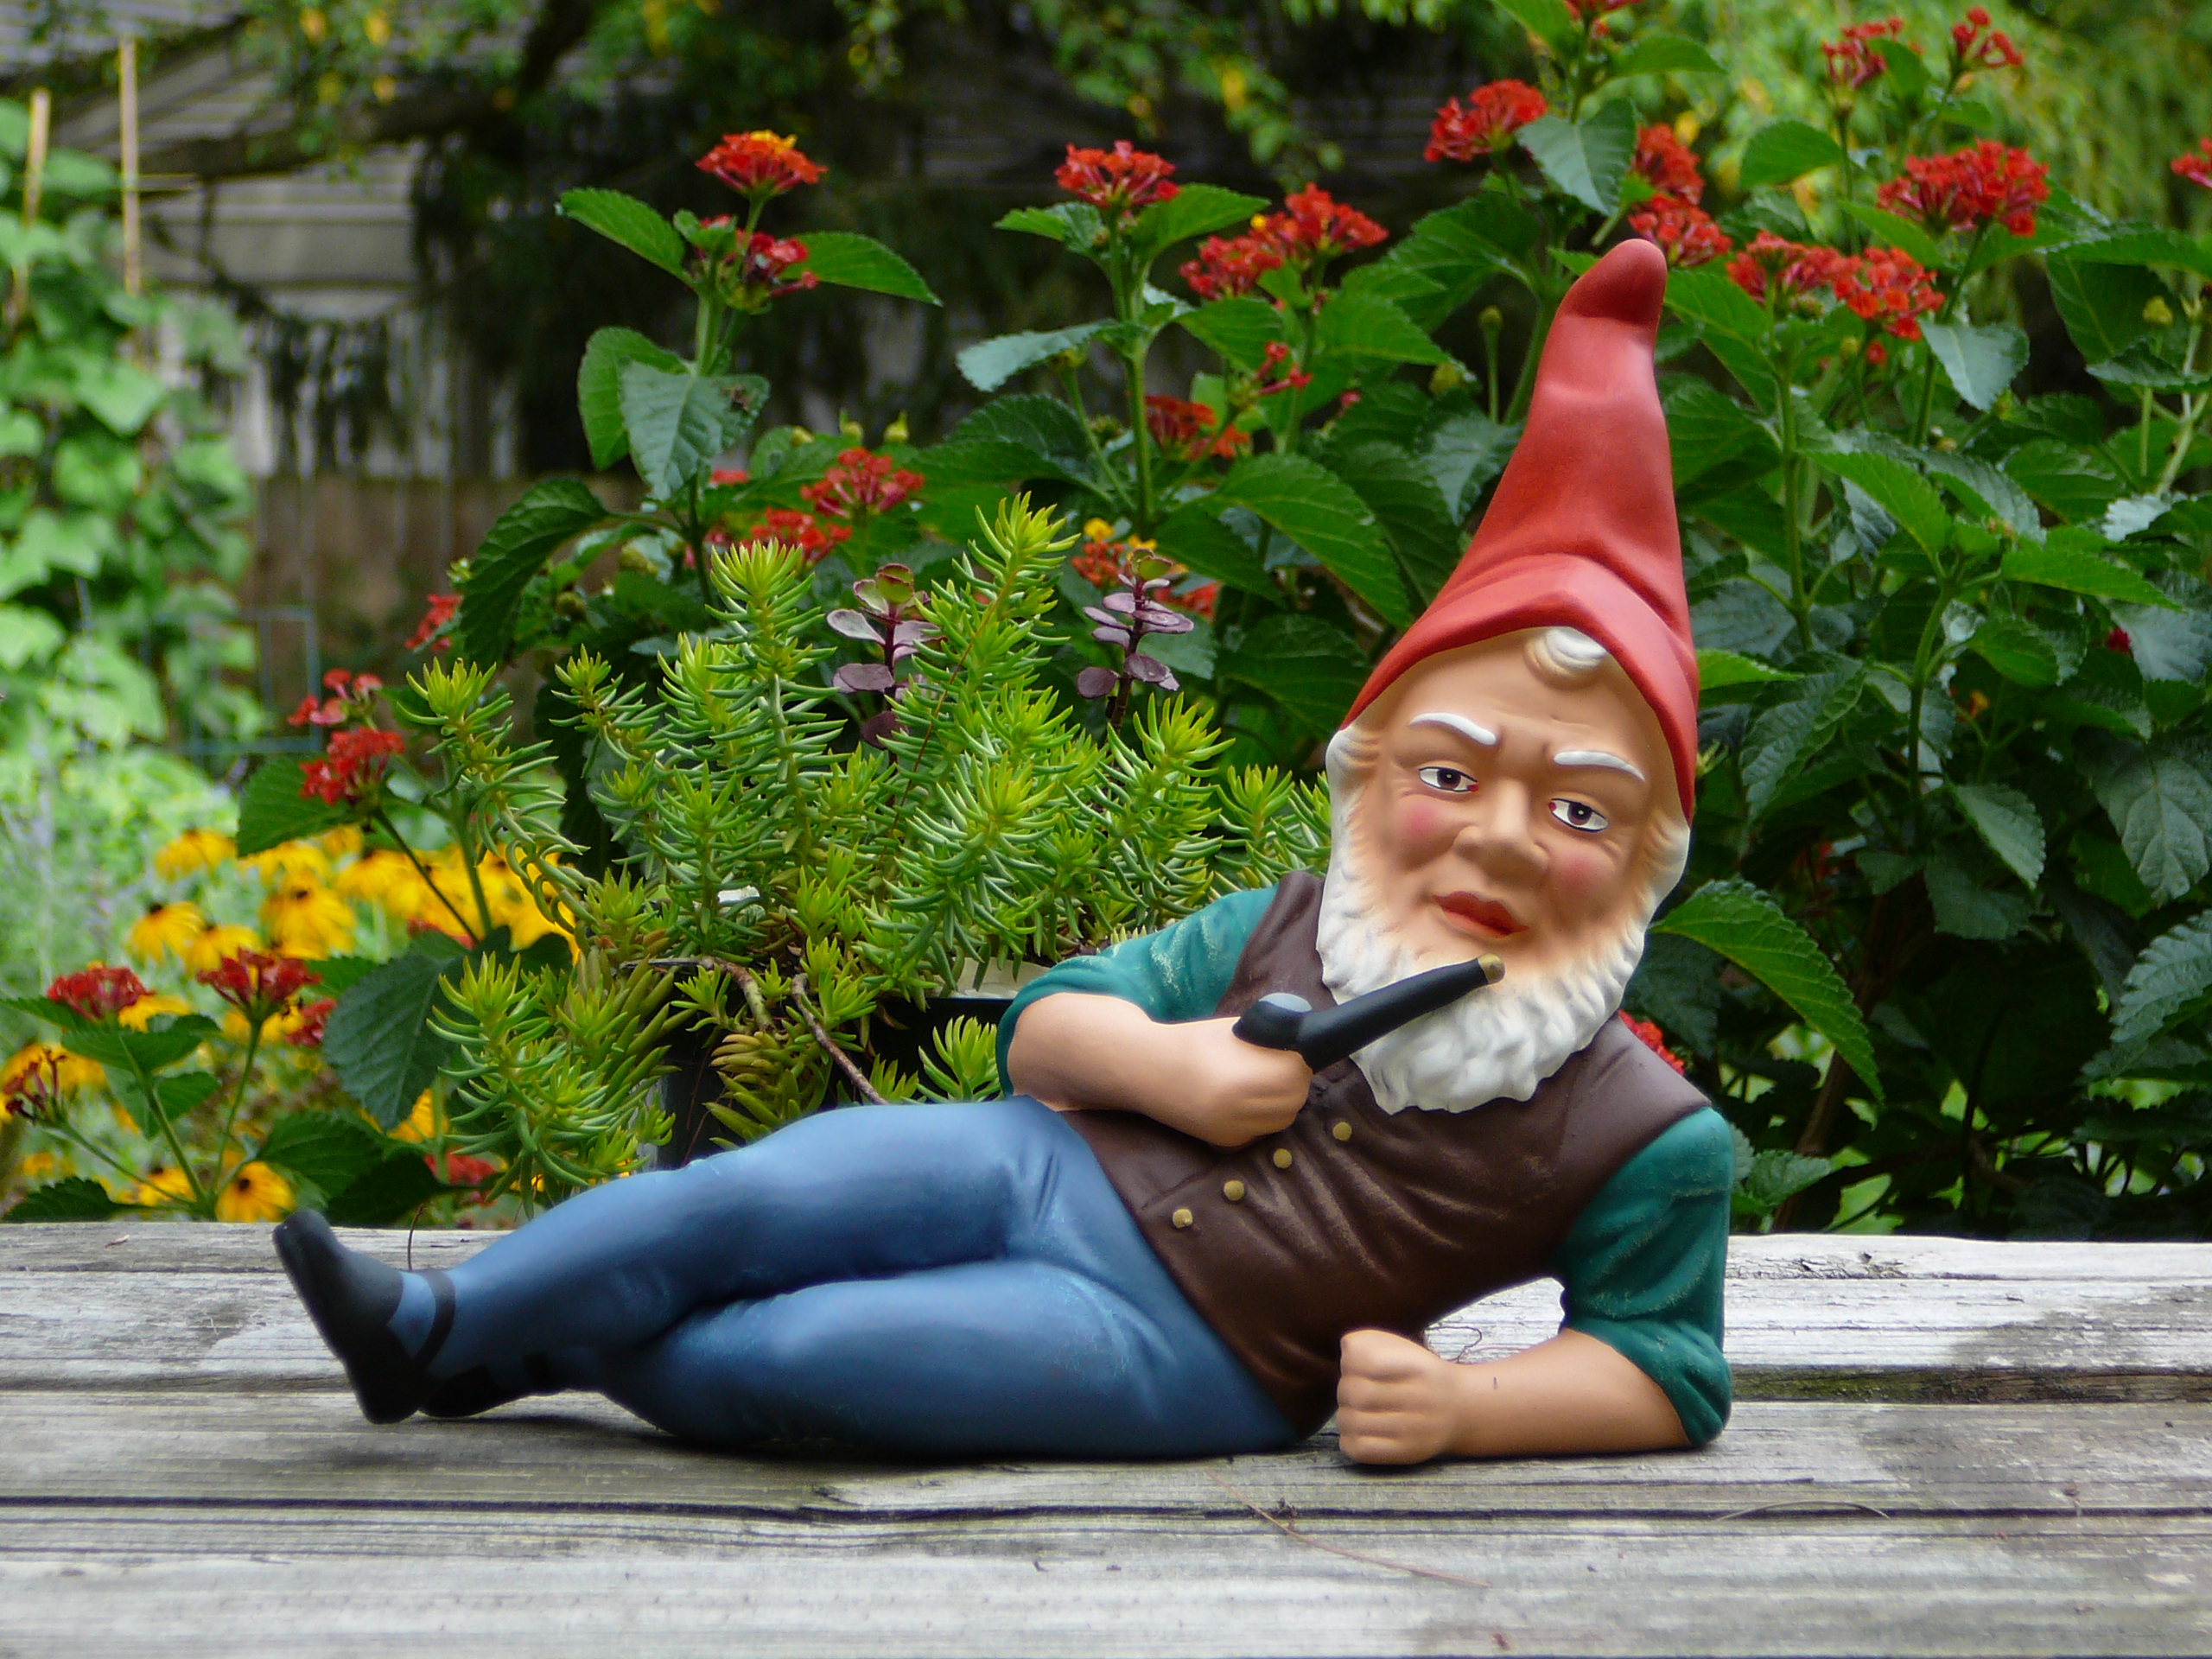 German_garden_gnome.jpg